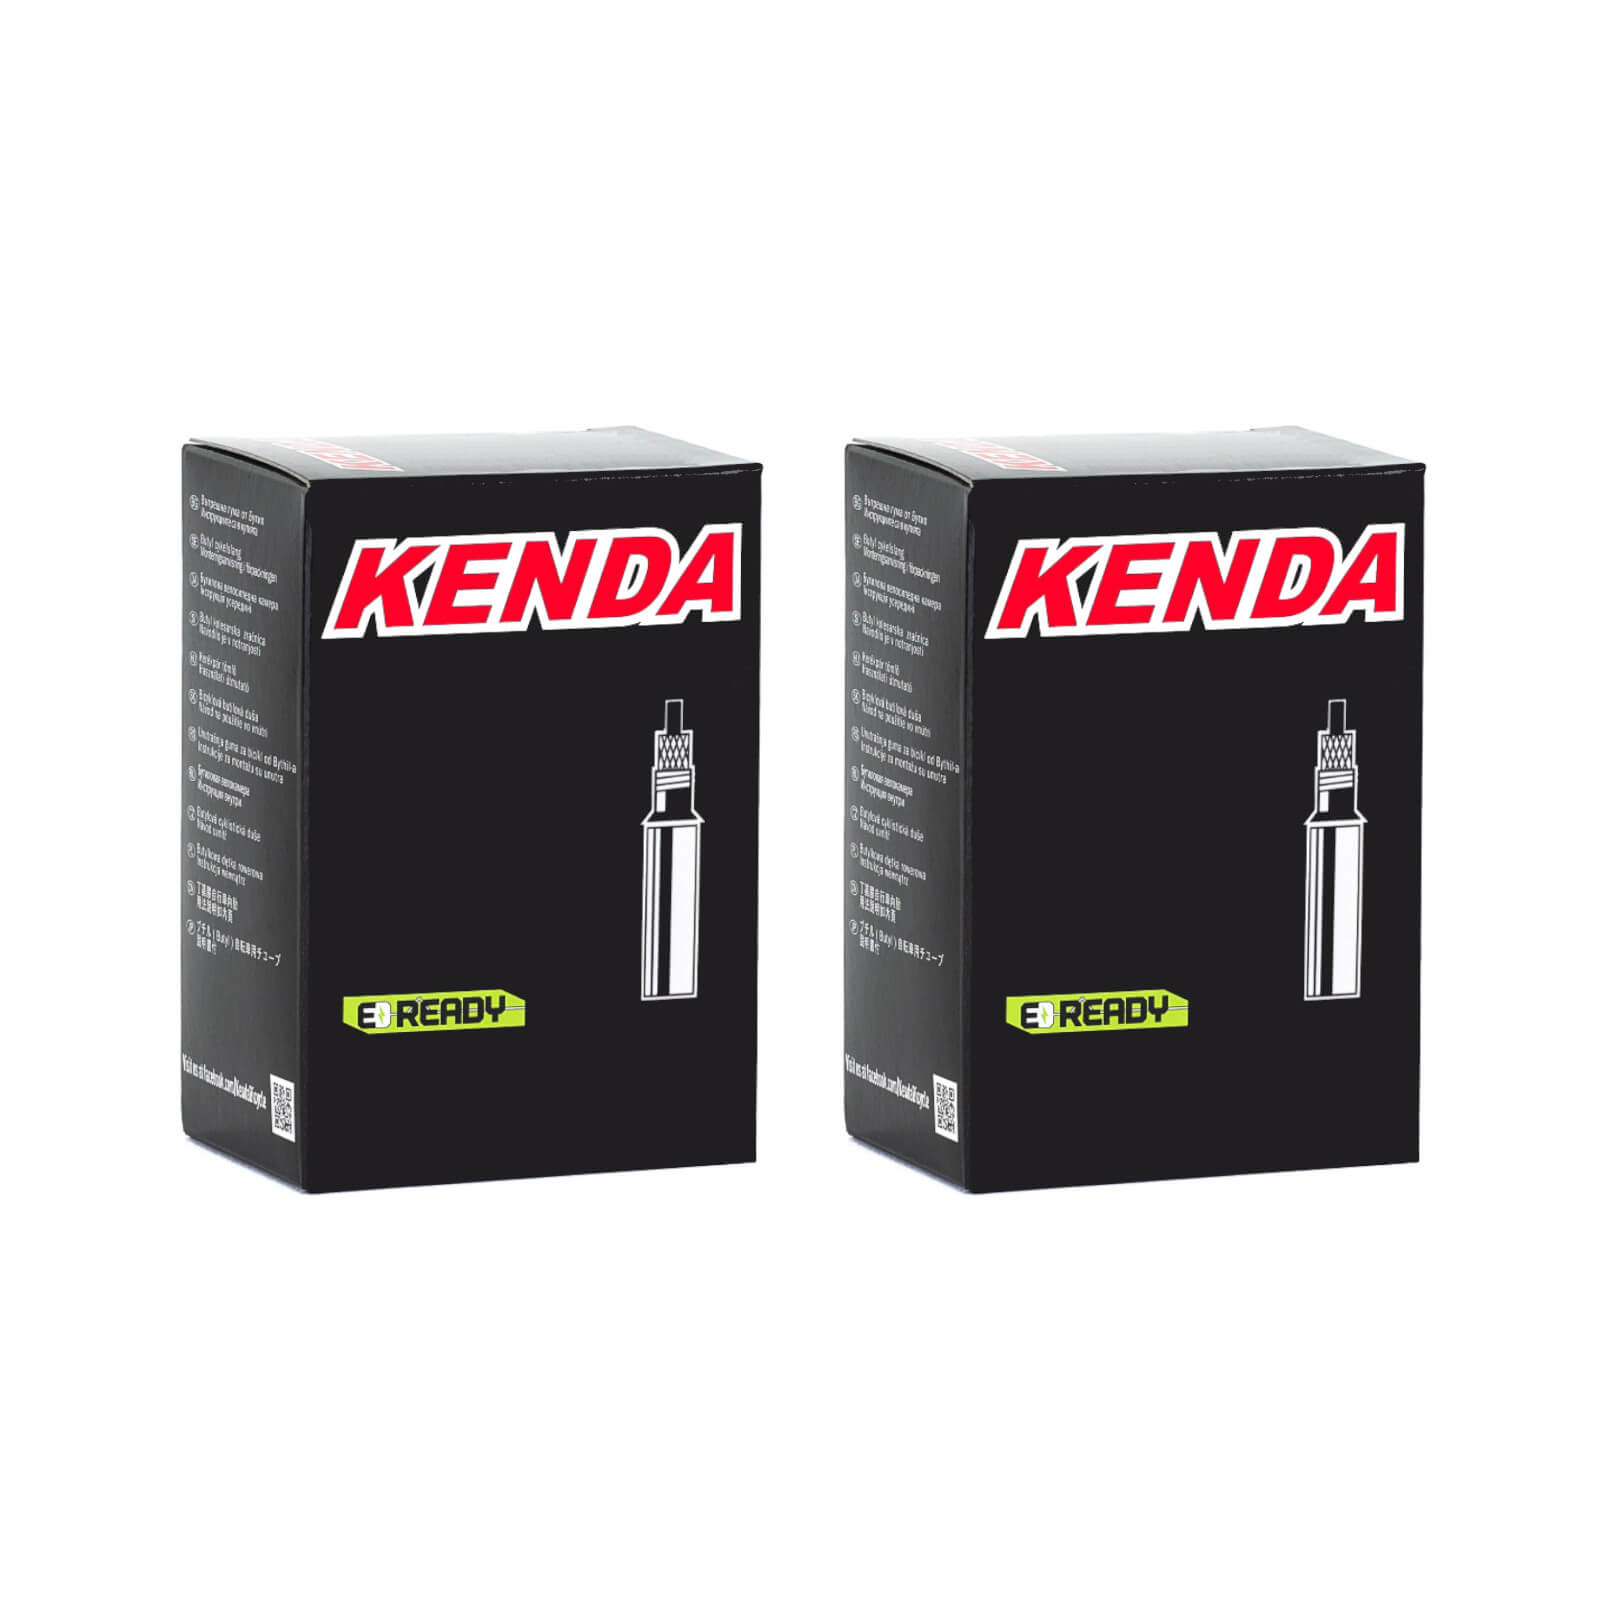 Kenda 24x1.5-2.0" 24 Inch Presta Valve Bike Inner Tube Pack of 2